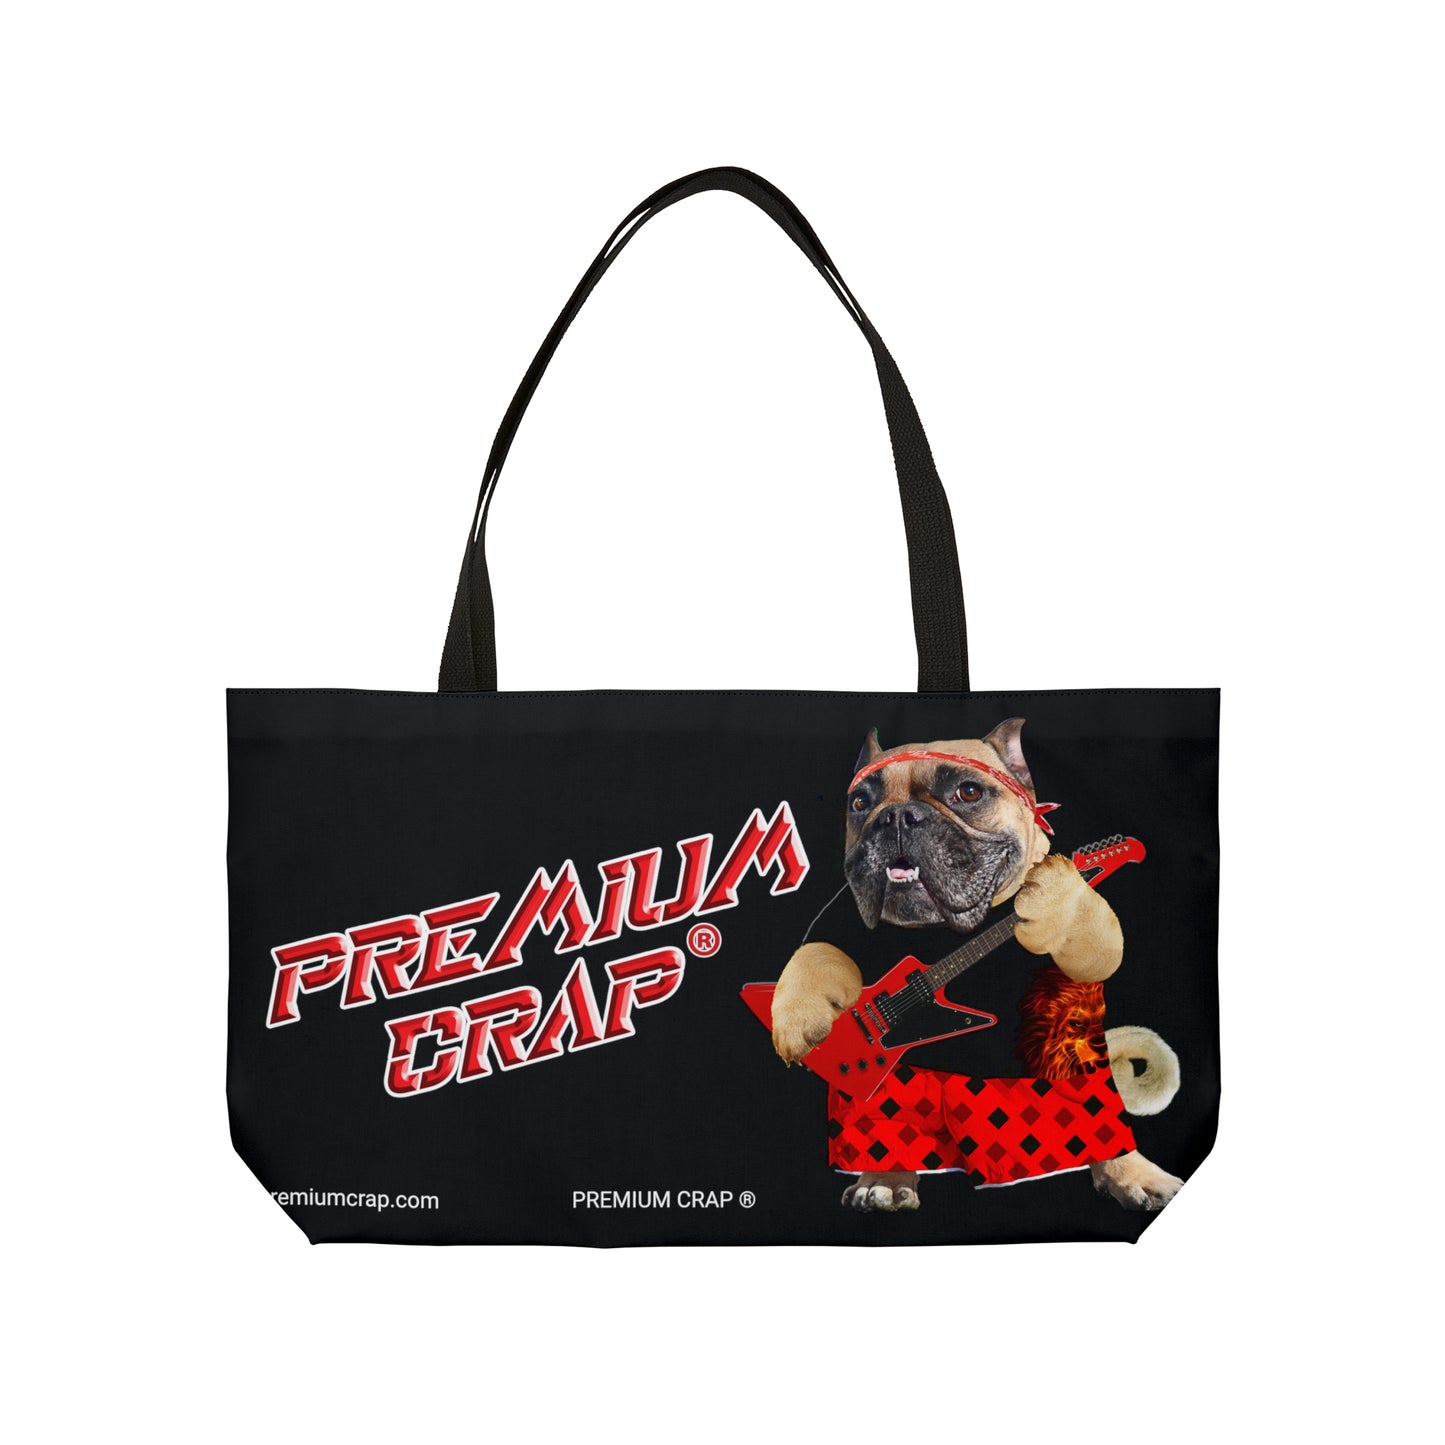 Premium Crap II Weekender Tote Bag